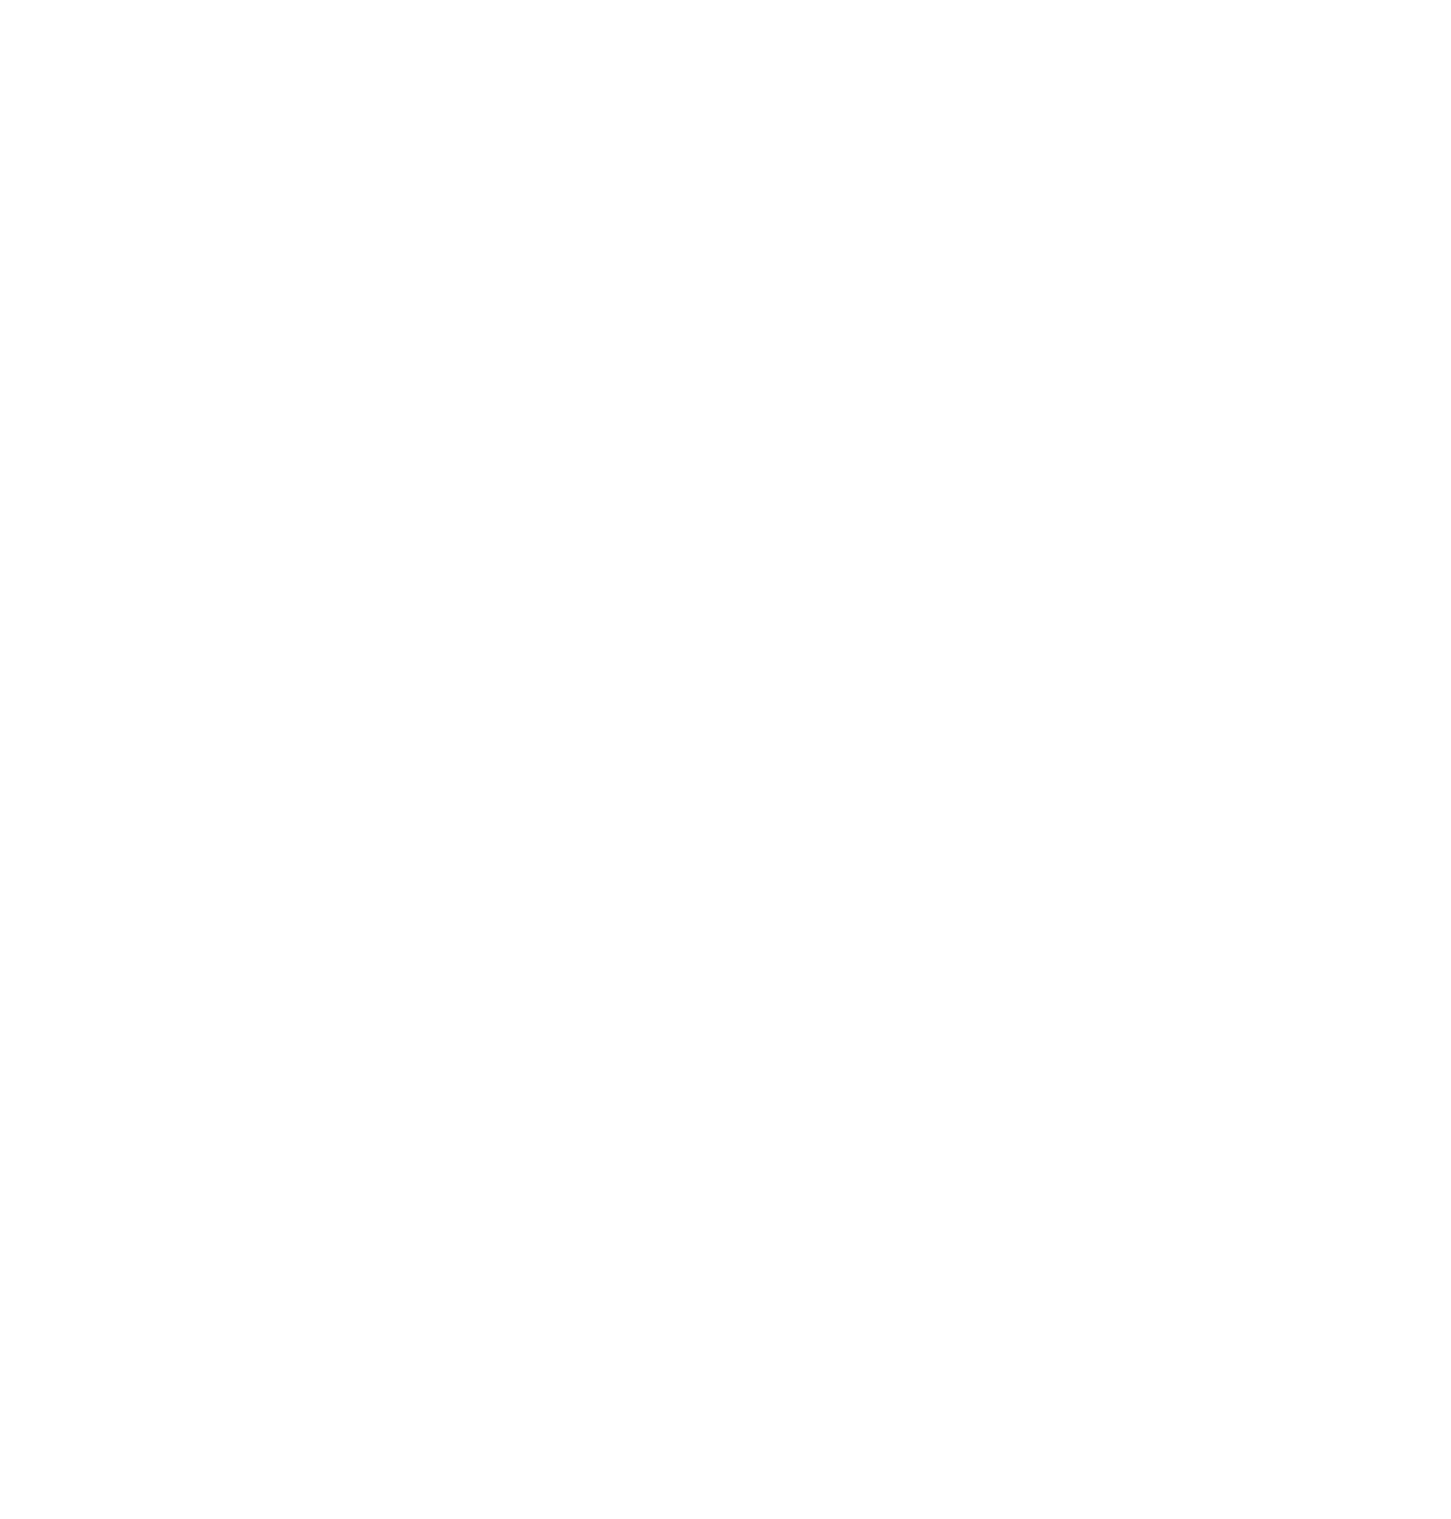 Akouos logo pour fonds sombres (PNG transparent)